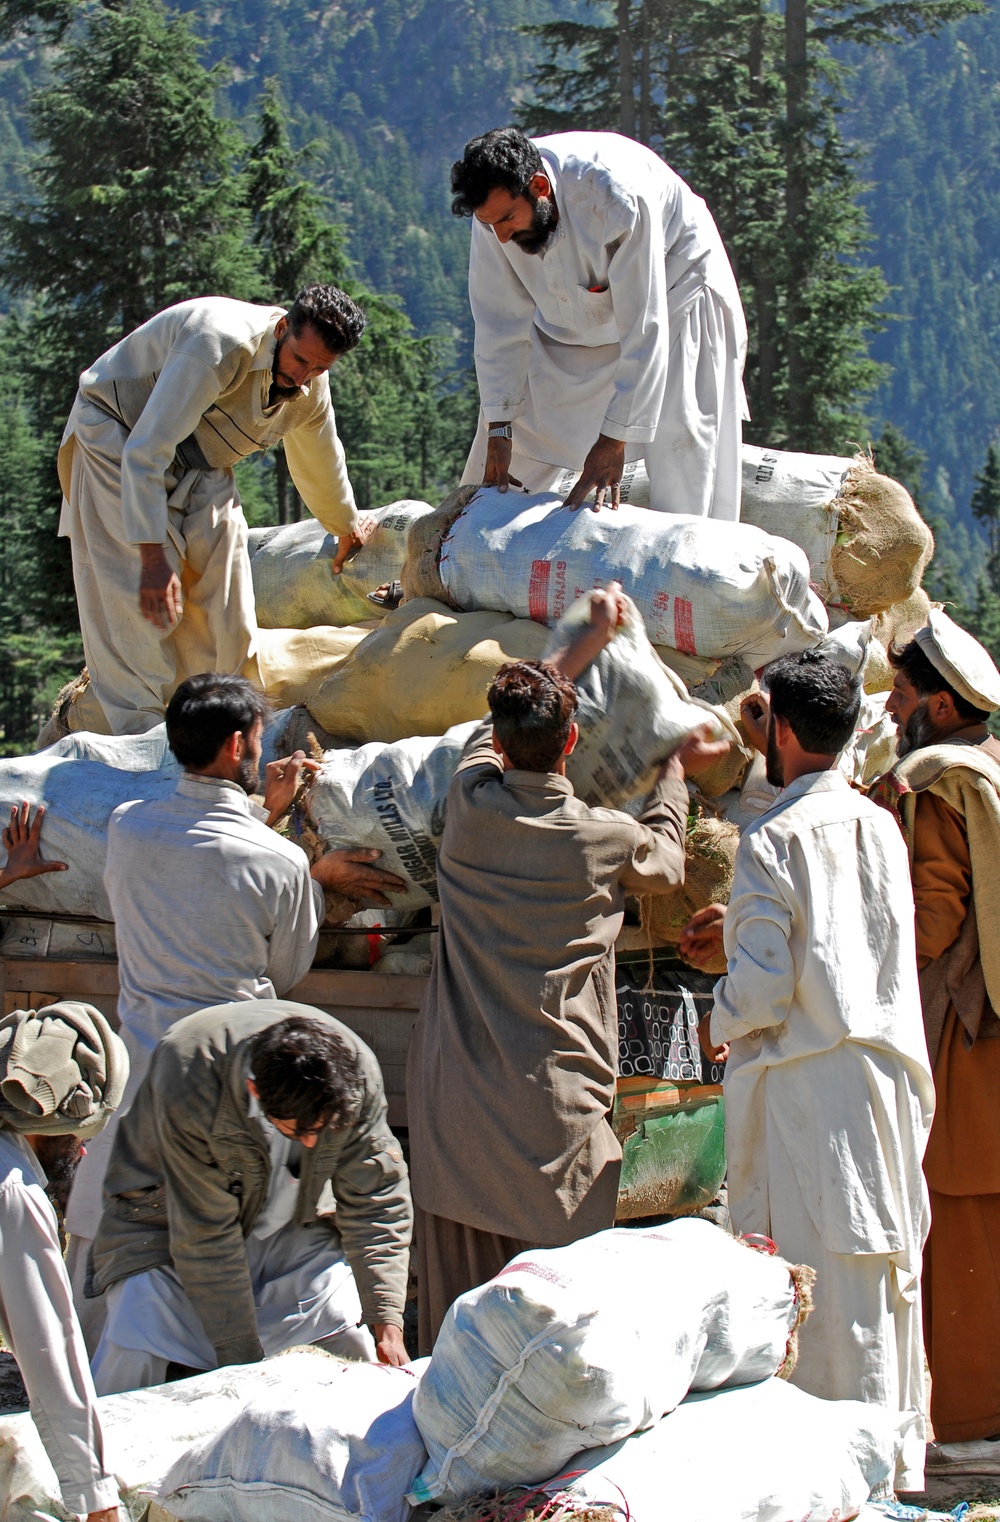 'Sugar Bears' in Pakistan, on 'flight' and 'helping people'